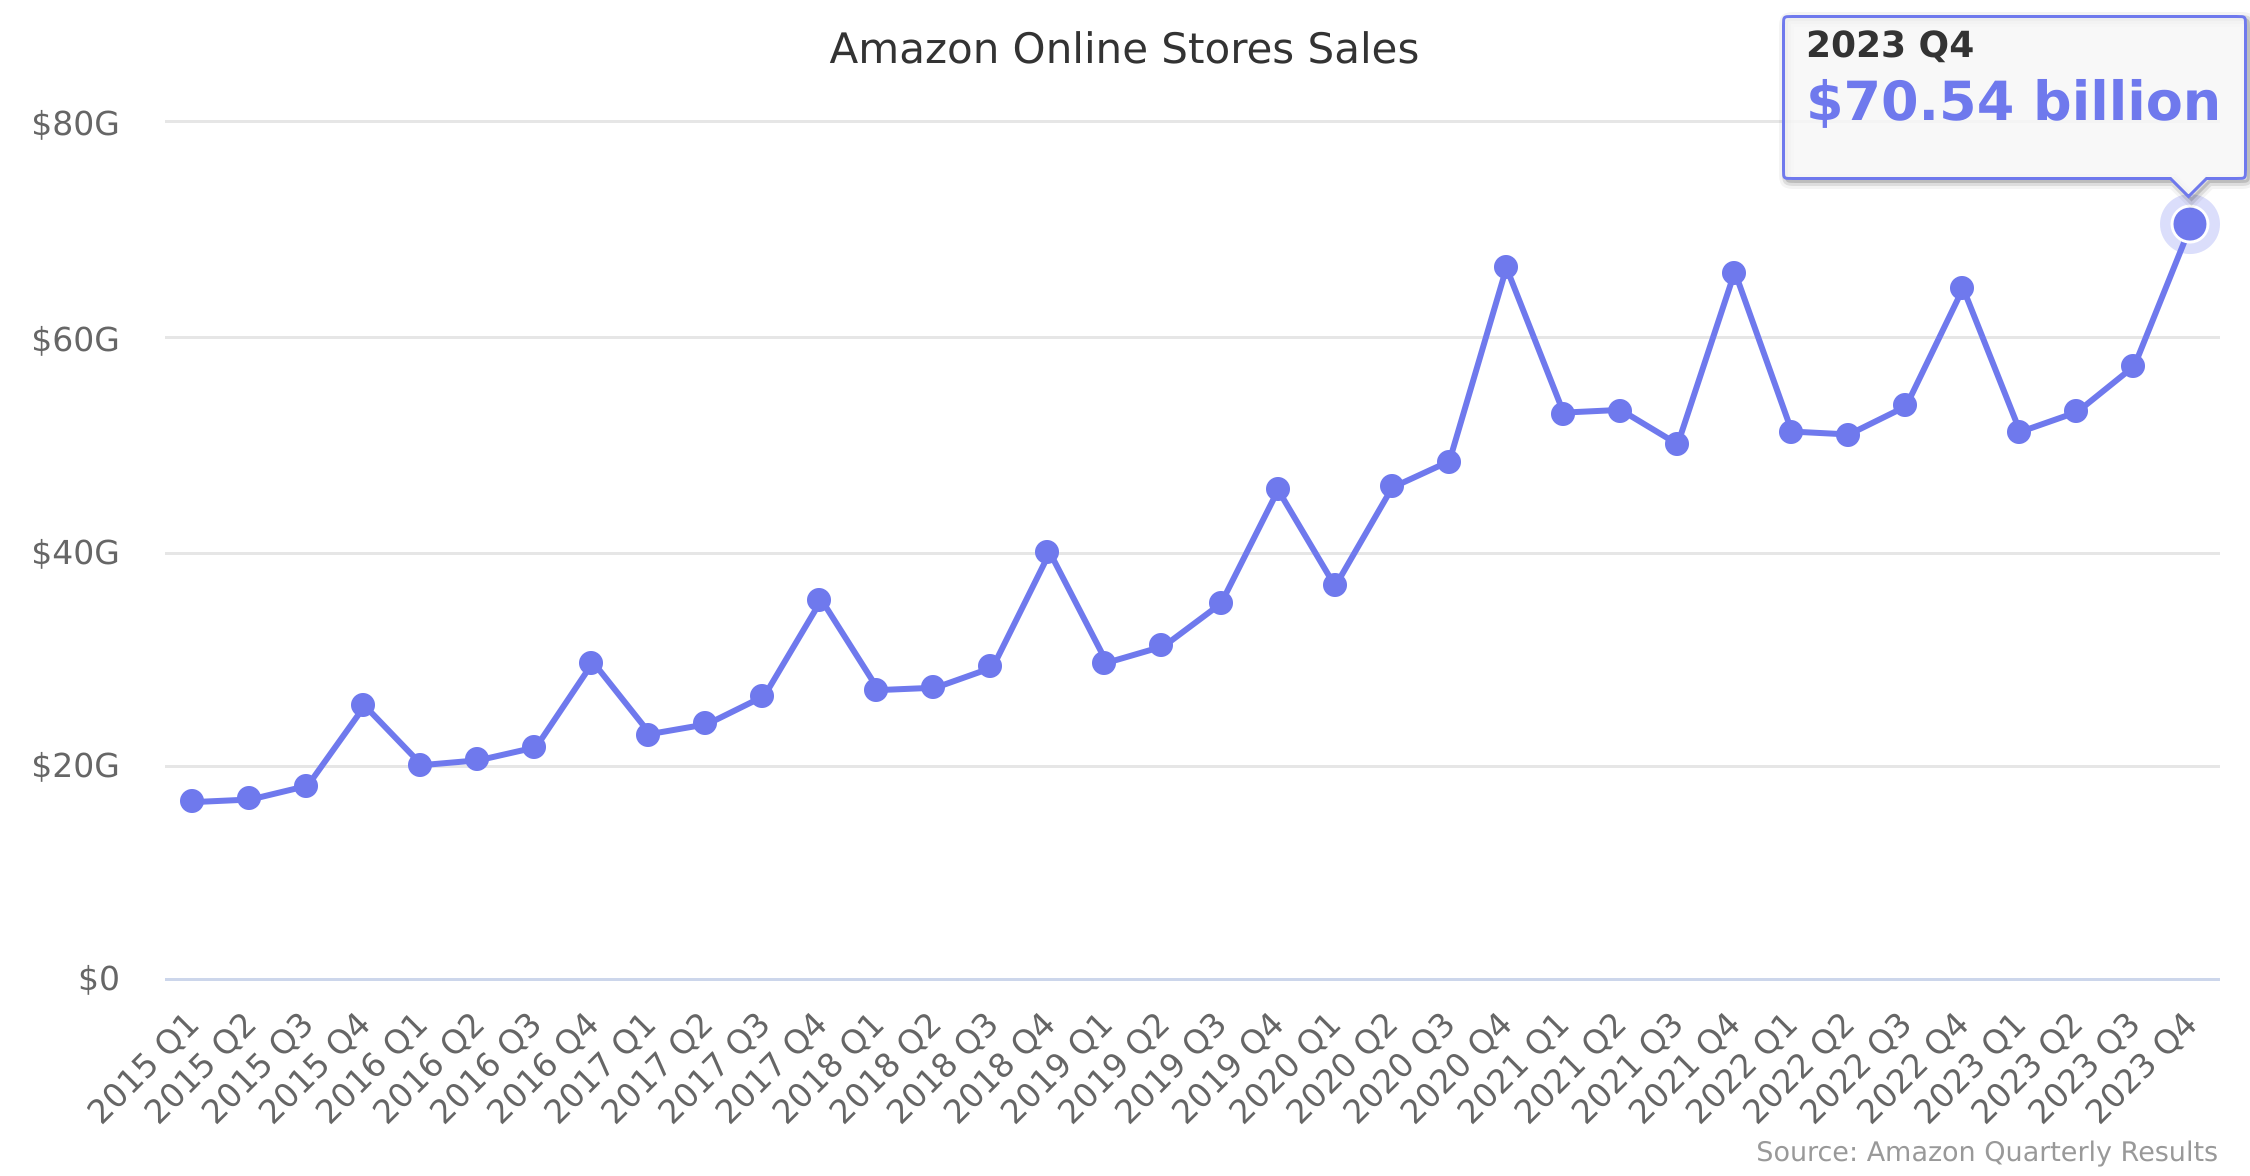 Amazon Online Stores Sales 2015-2022